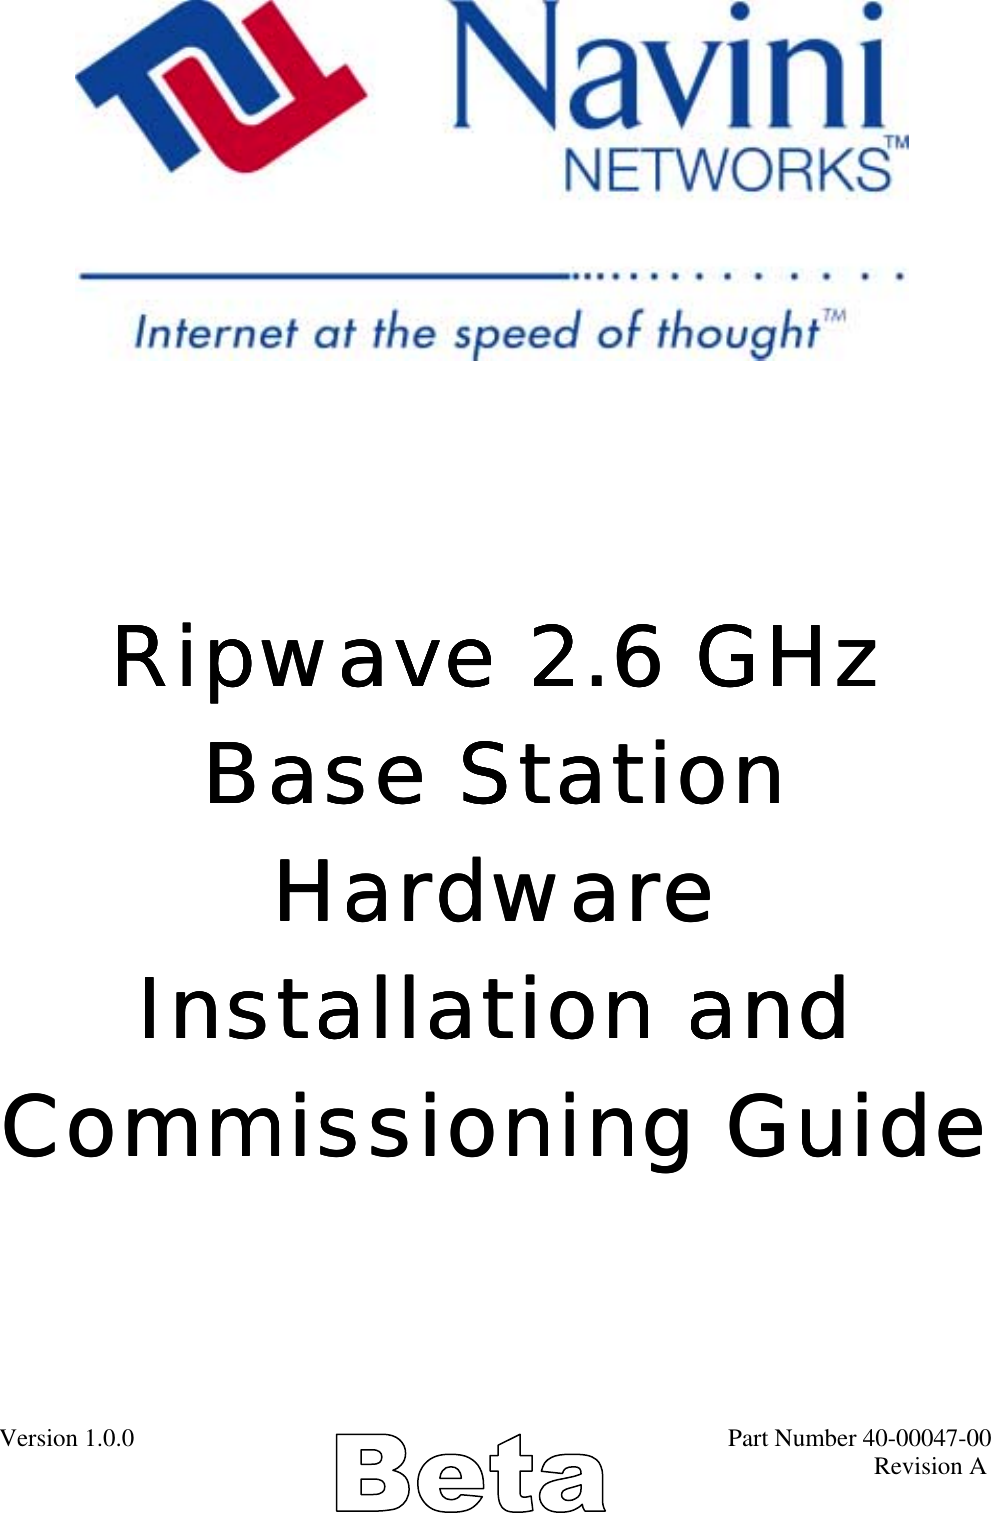 Version 1.0.0                                                                                               Part Number 40-00047-00                                                                                                                                             Revision A                                   Ripwave 2.6 GHz Ripwave 2.6 GHz Ripwave 2.6 GHz Ripwave 2.6 GHz     BaBaBaBase Station se Station se Station se Station HardwareHardwareHardwareHardware    Installation and Installation and Installation and Installation and Commissioning GuideCommissioning GuideCommissioning GuideCommissioning Guide 